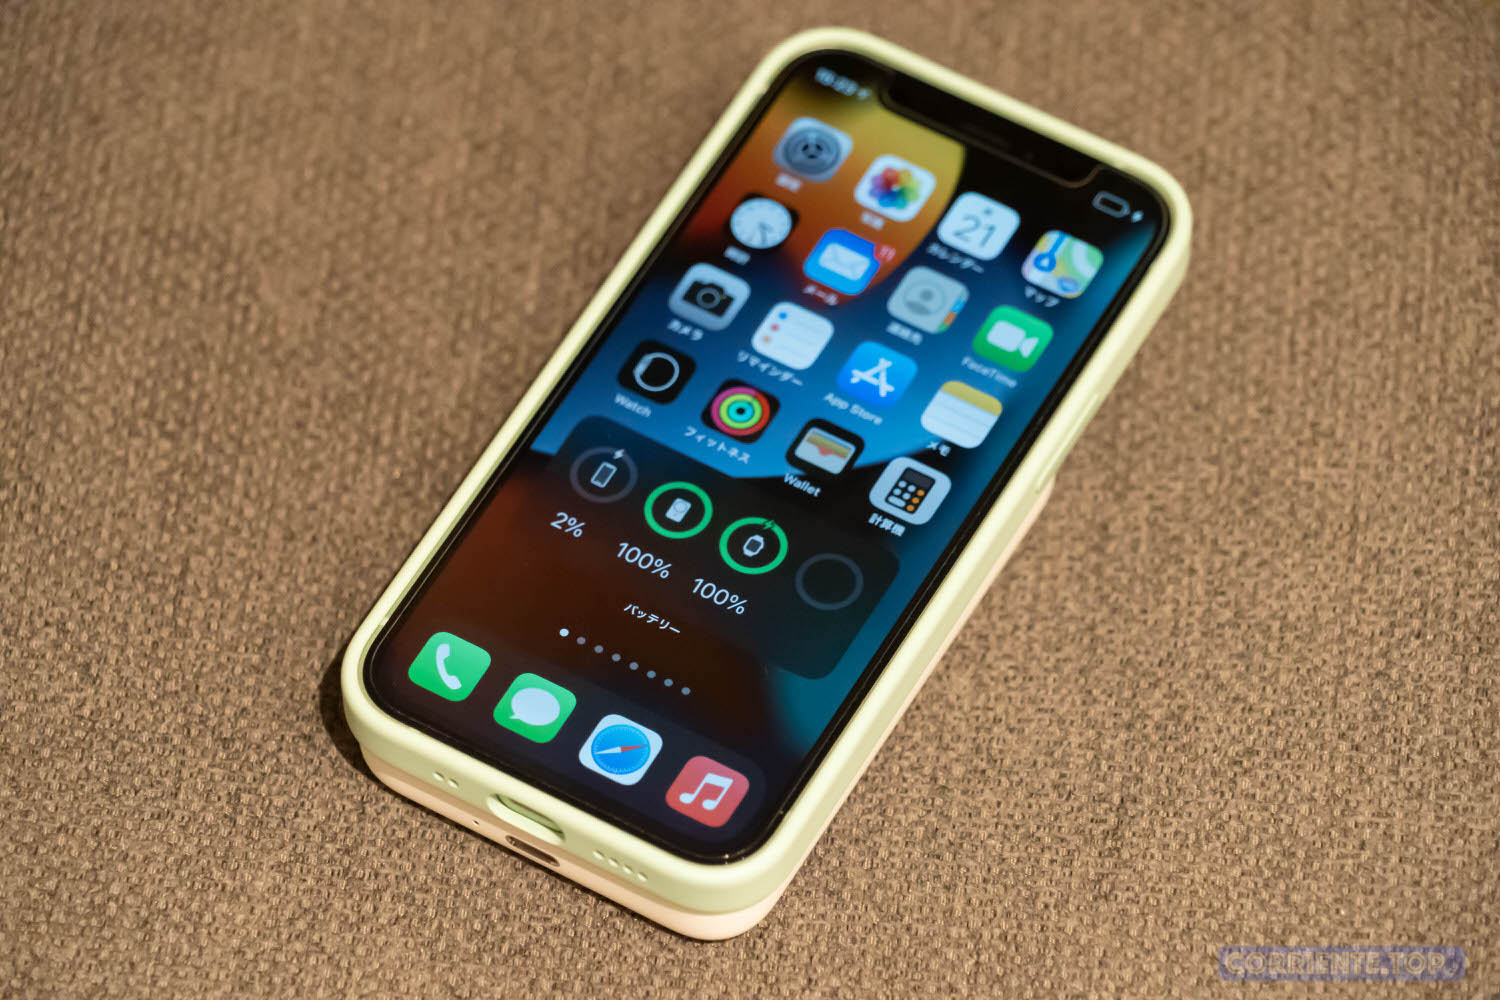 MagSafeバッテリーパック レビュー | iPhone 12のバッテリーを拡張する便利グッズ。その魅力を解説 | CoRRiENTE.top